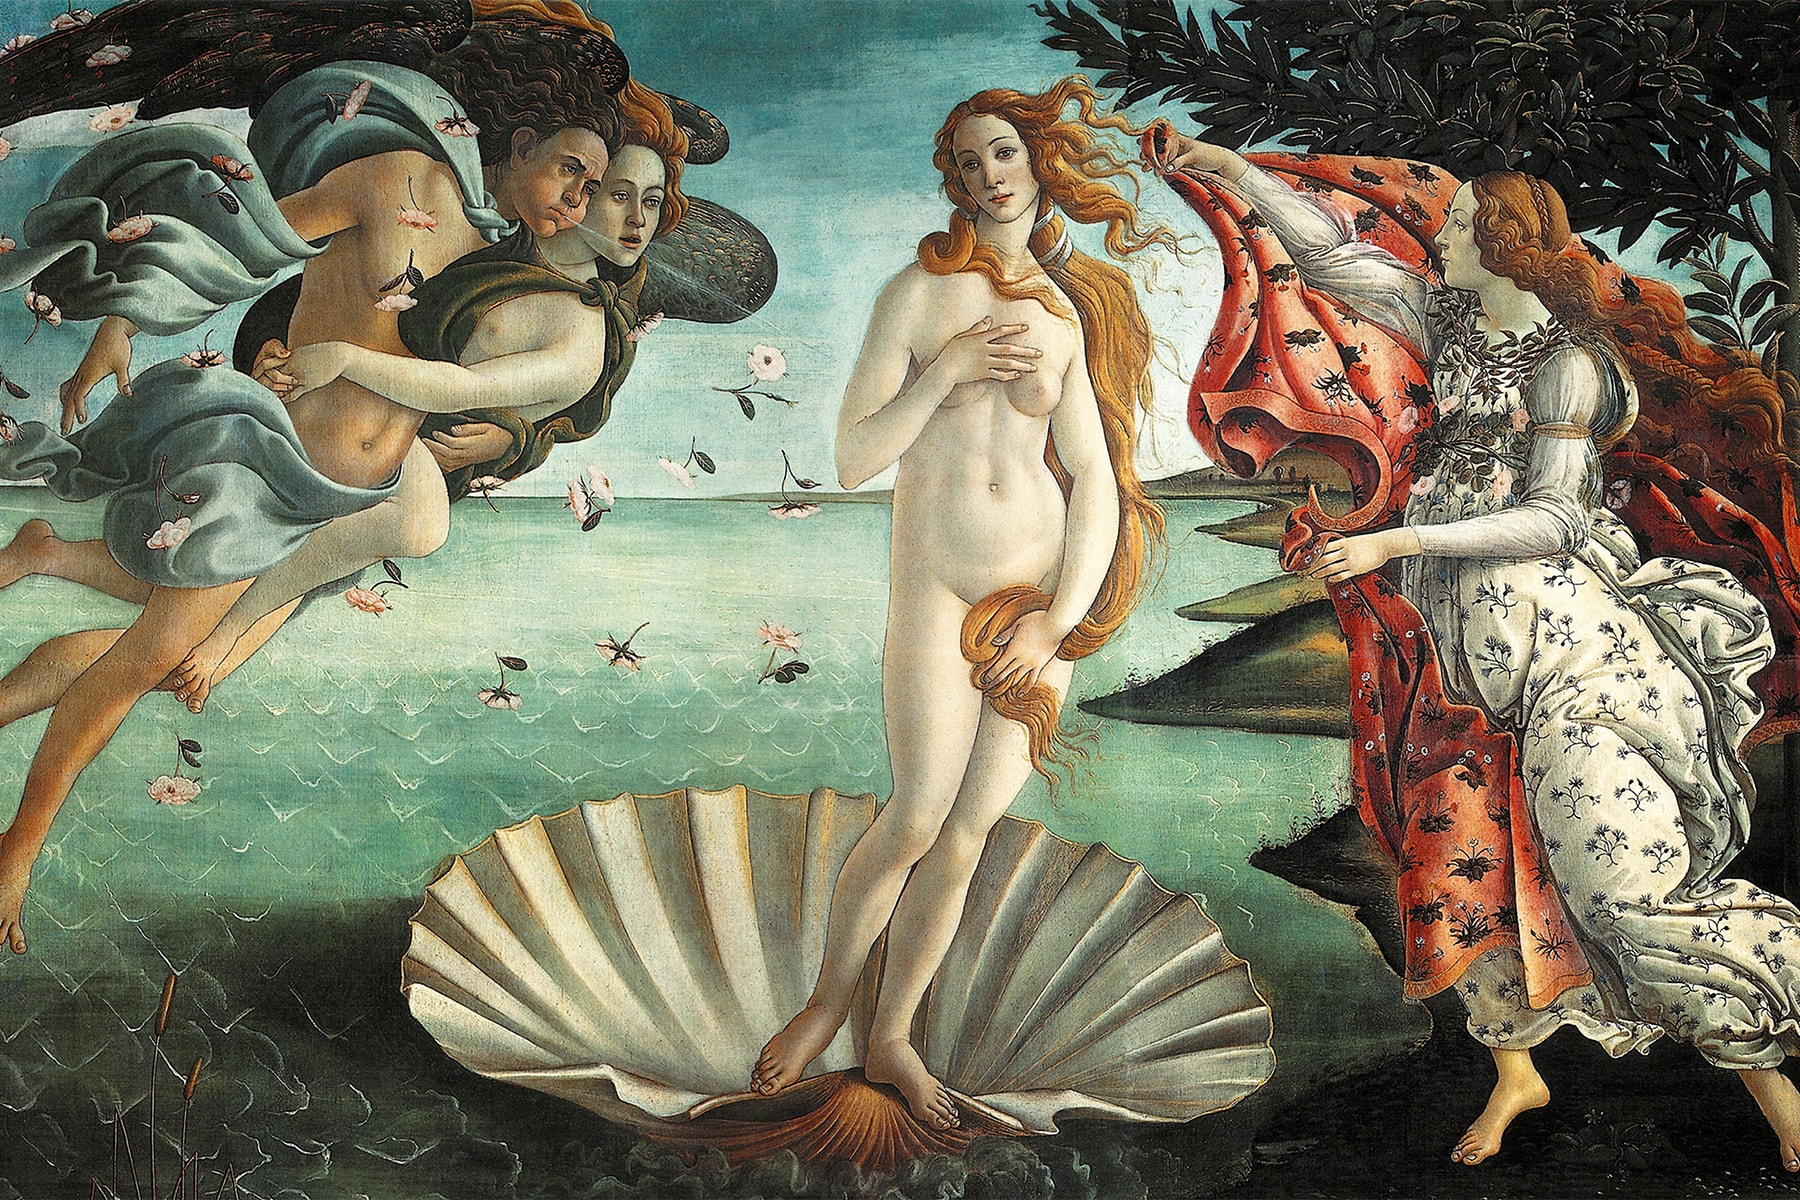 Uffizi Gallery Jean Paul Gaultier Sandro Botticelli The Birth of Venus lawsuit 